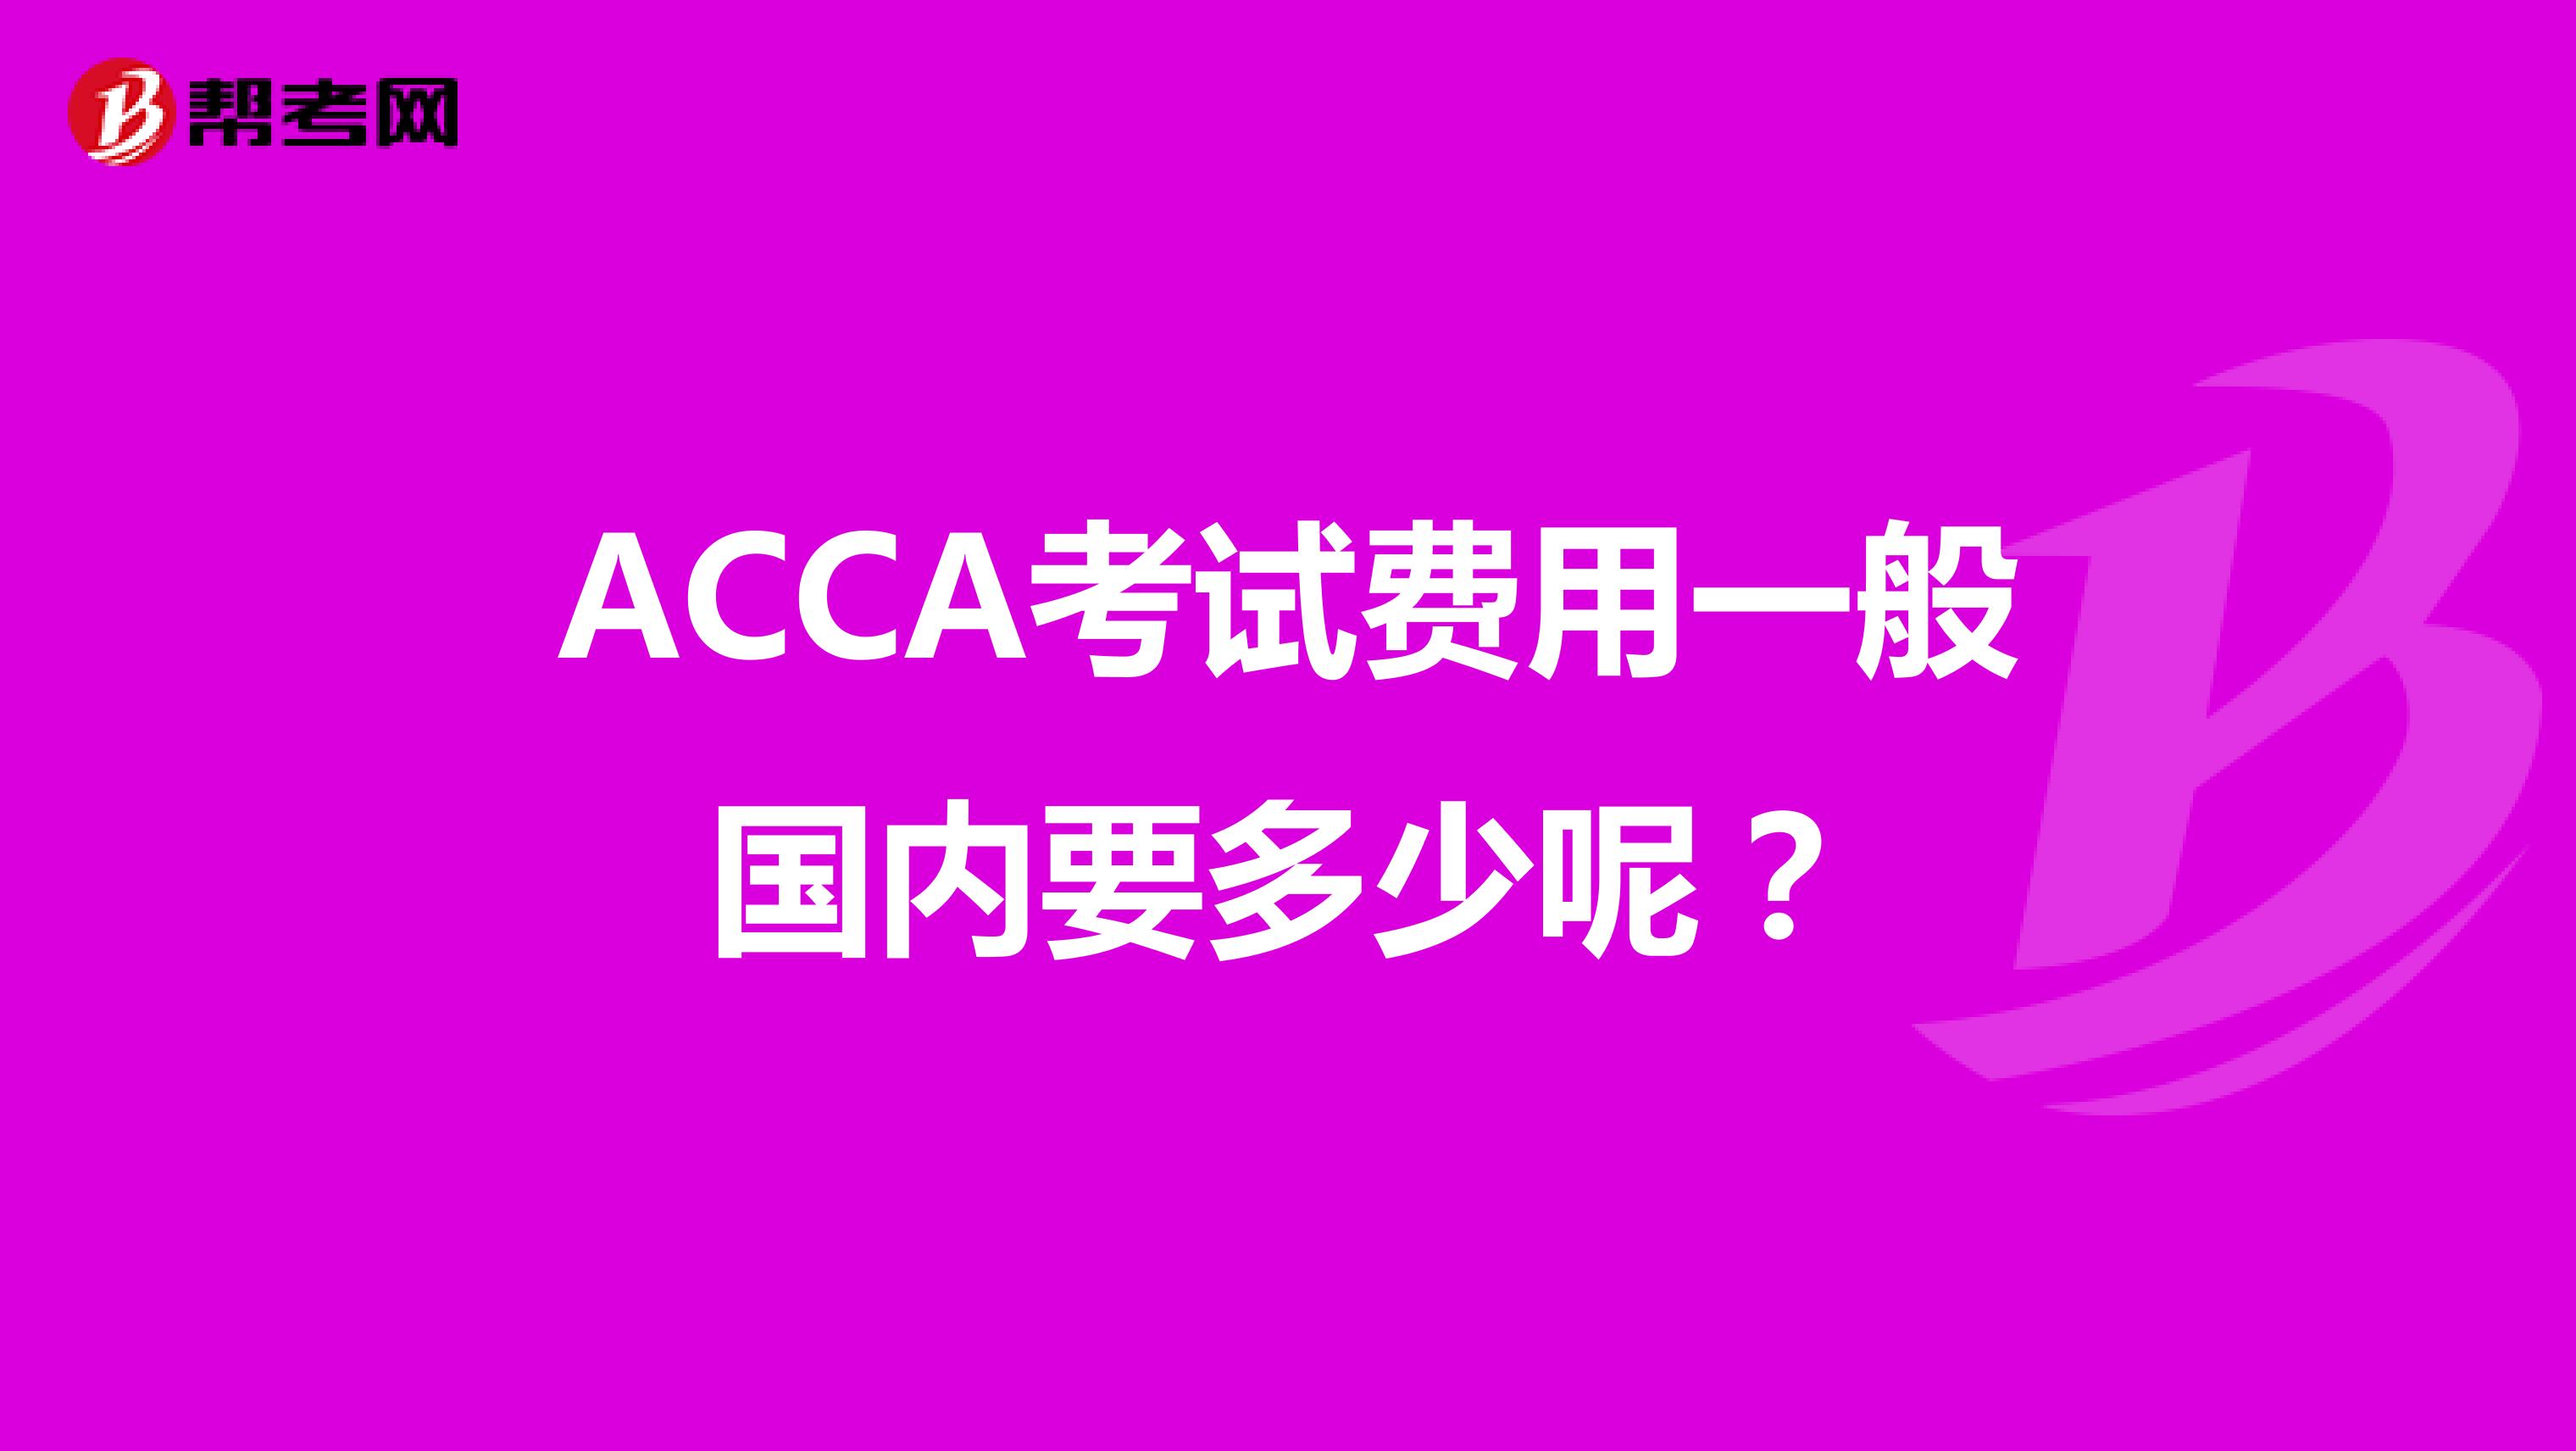 ACCA考试费用一般国内要多少呢？